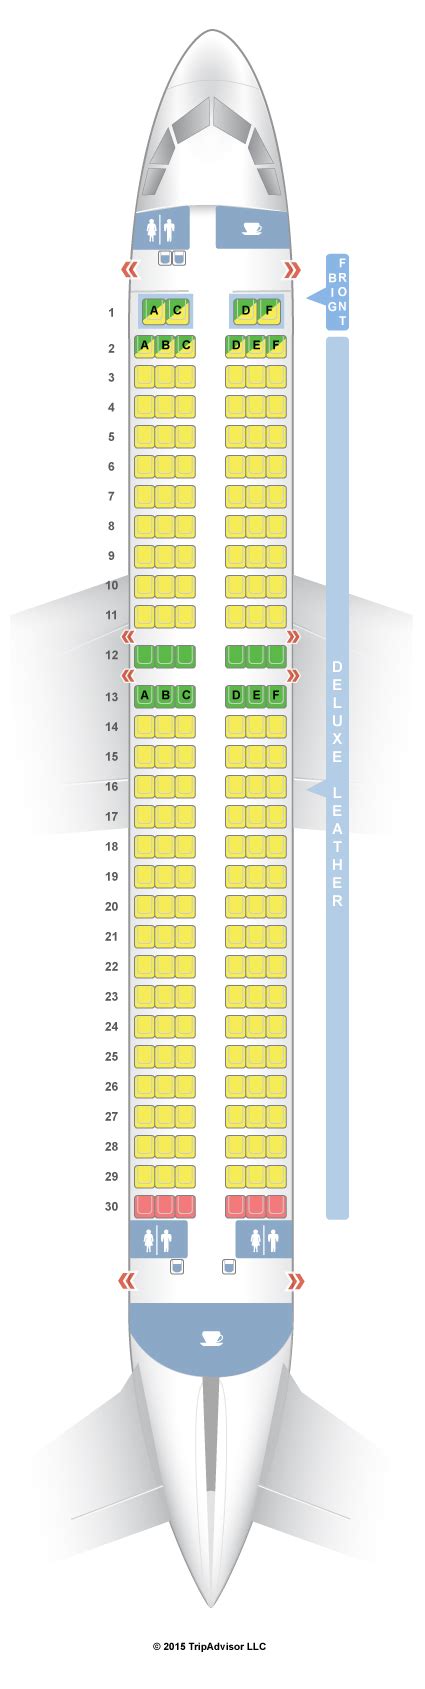 Spirit Airways Airbus A320 Seat Map; Seat 8f; Spirit Airways Review